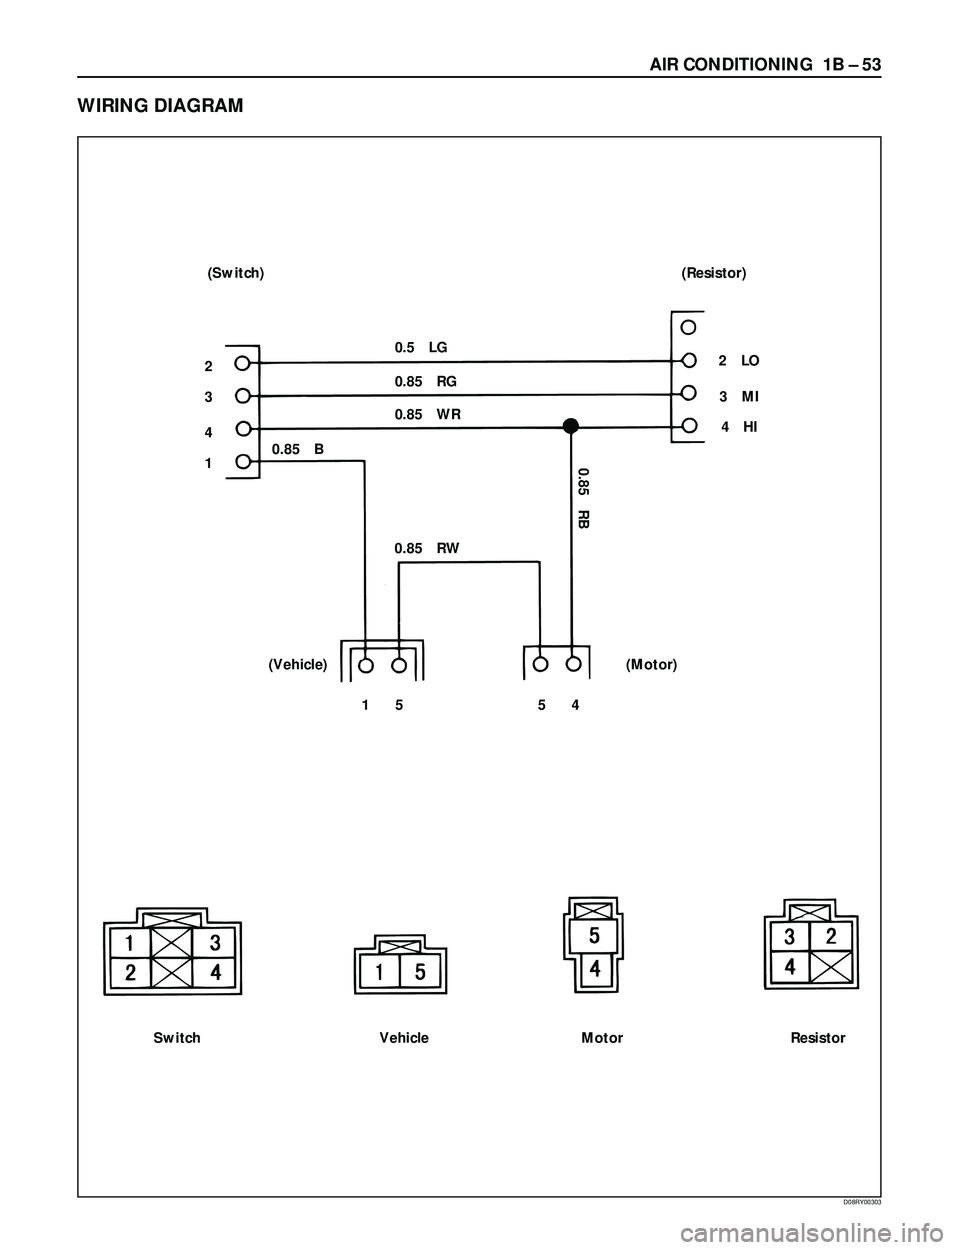 ISUZU TROOPER 1998  Service Repair Manual AIR CONDITIONING  1B Ð 53
Switch Vehicle Motor Resistor15 54 (Vehicle) (Motor)0.85yRW 0.85yB
0.85yRB
(Resistor) (Switch)
0.5yLG
0.85yRG
0.85yWR 2
3
4
12yLO
3yMI
4yHI
WIRING DIAGRAM
D08RY0030